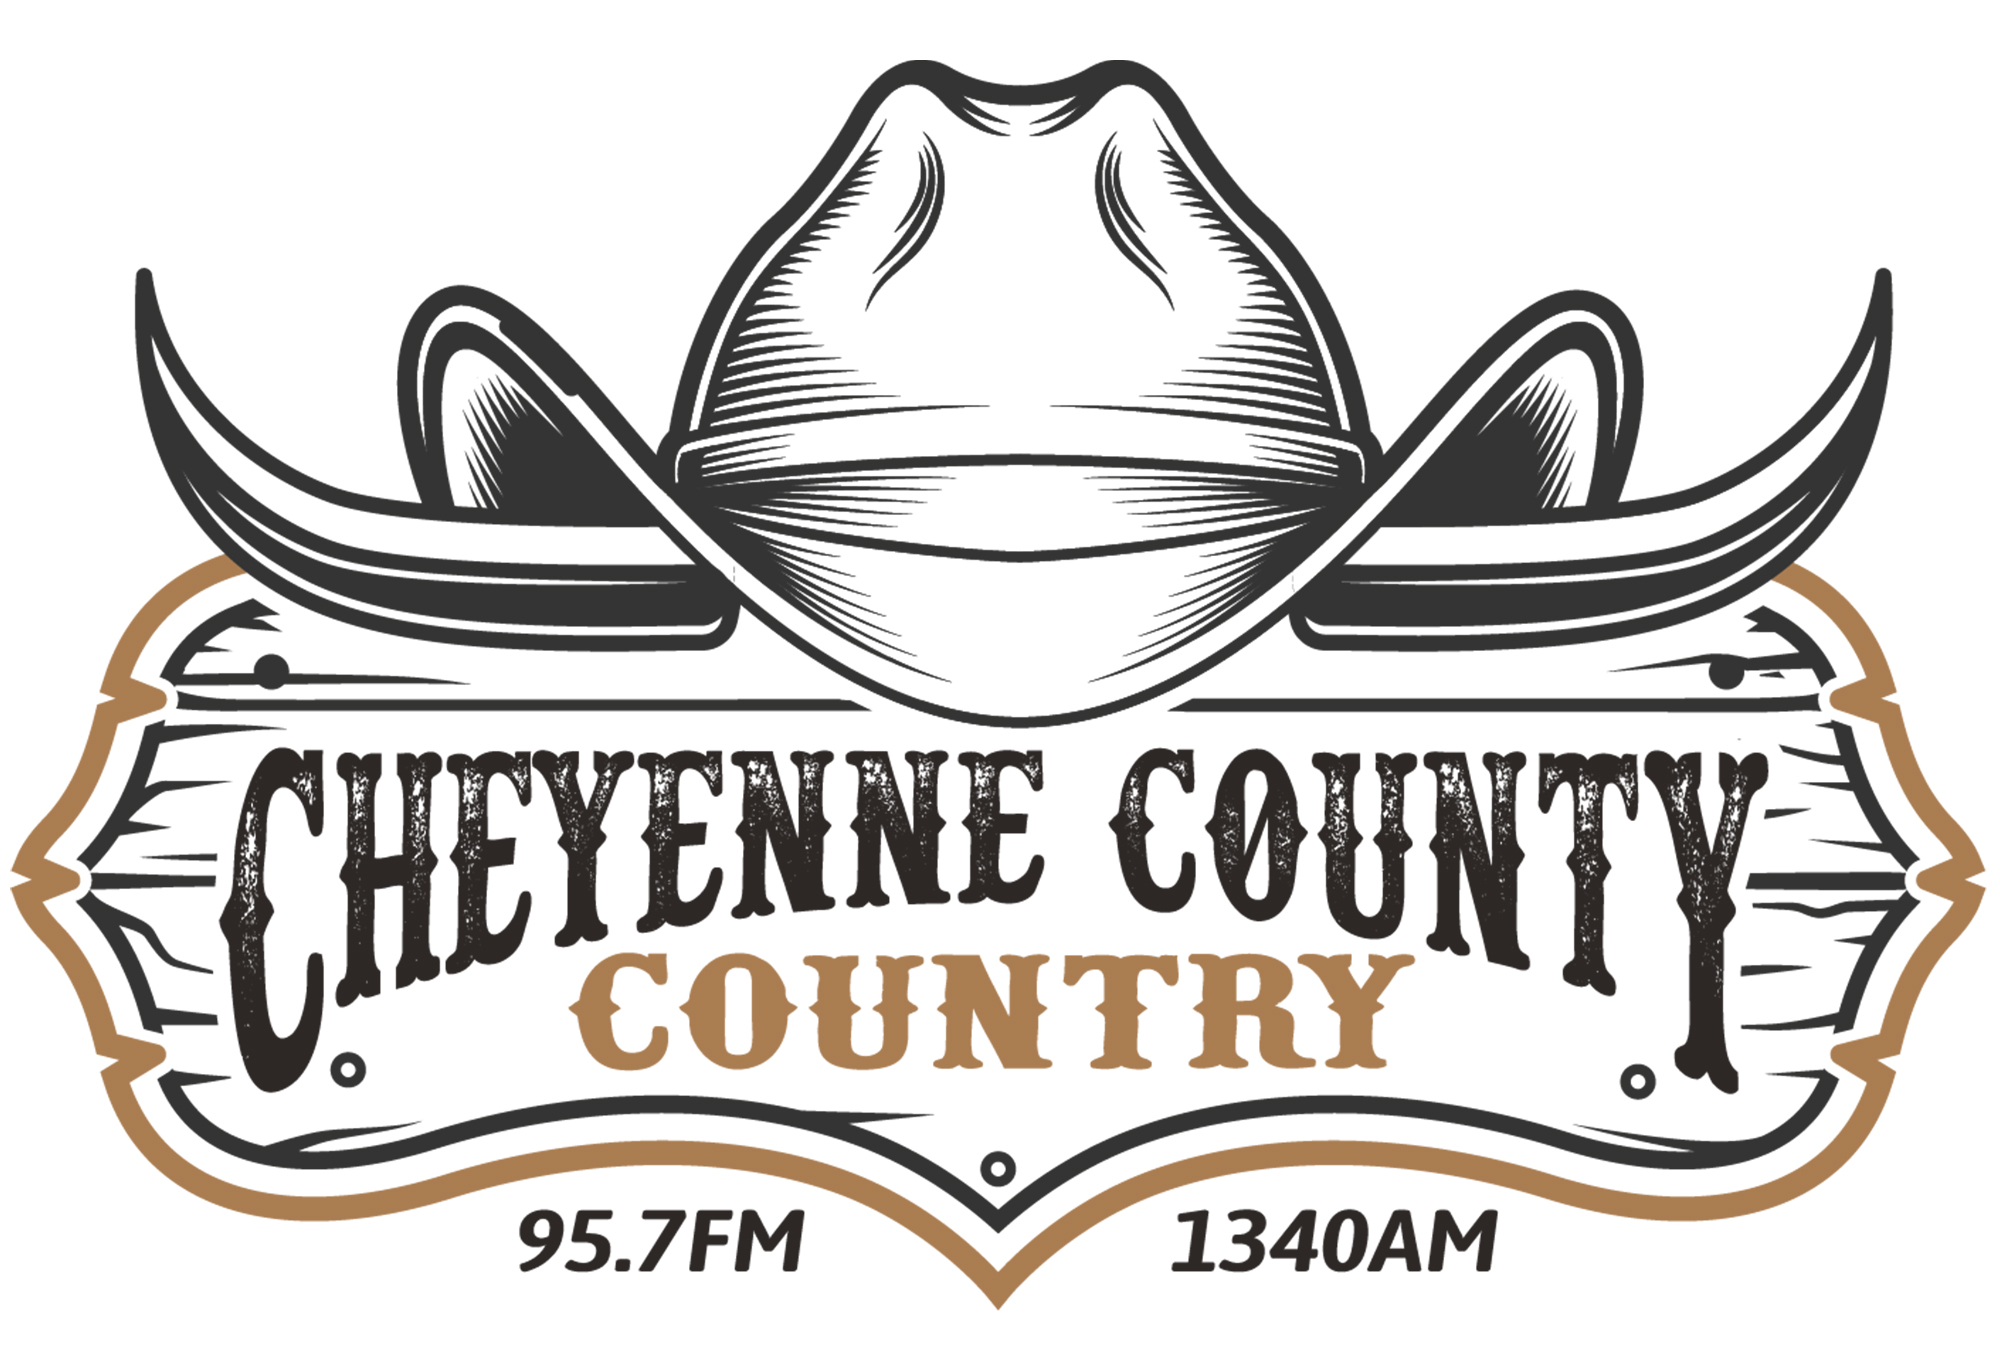 Cheyenne County Country